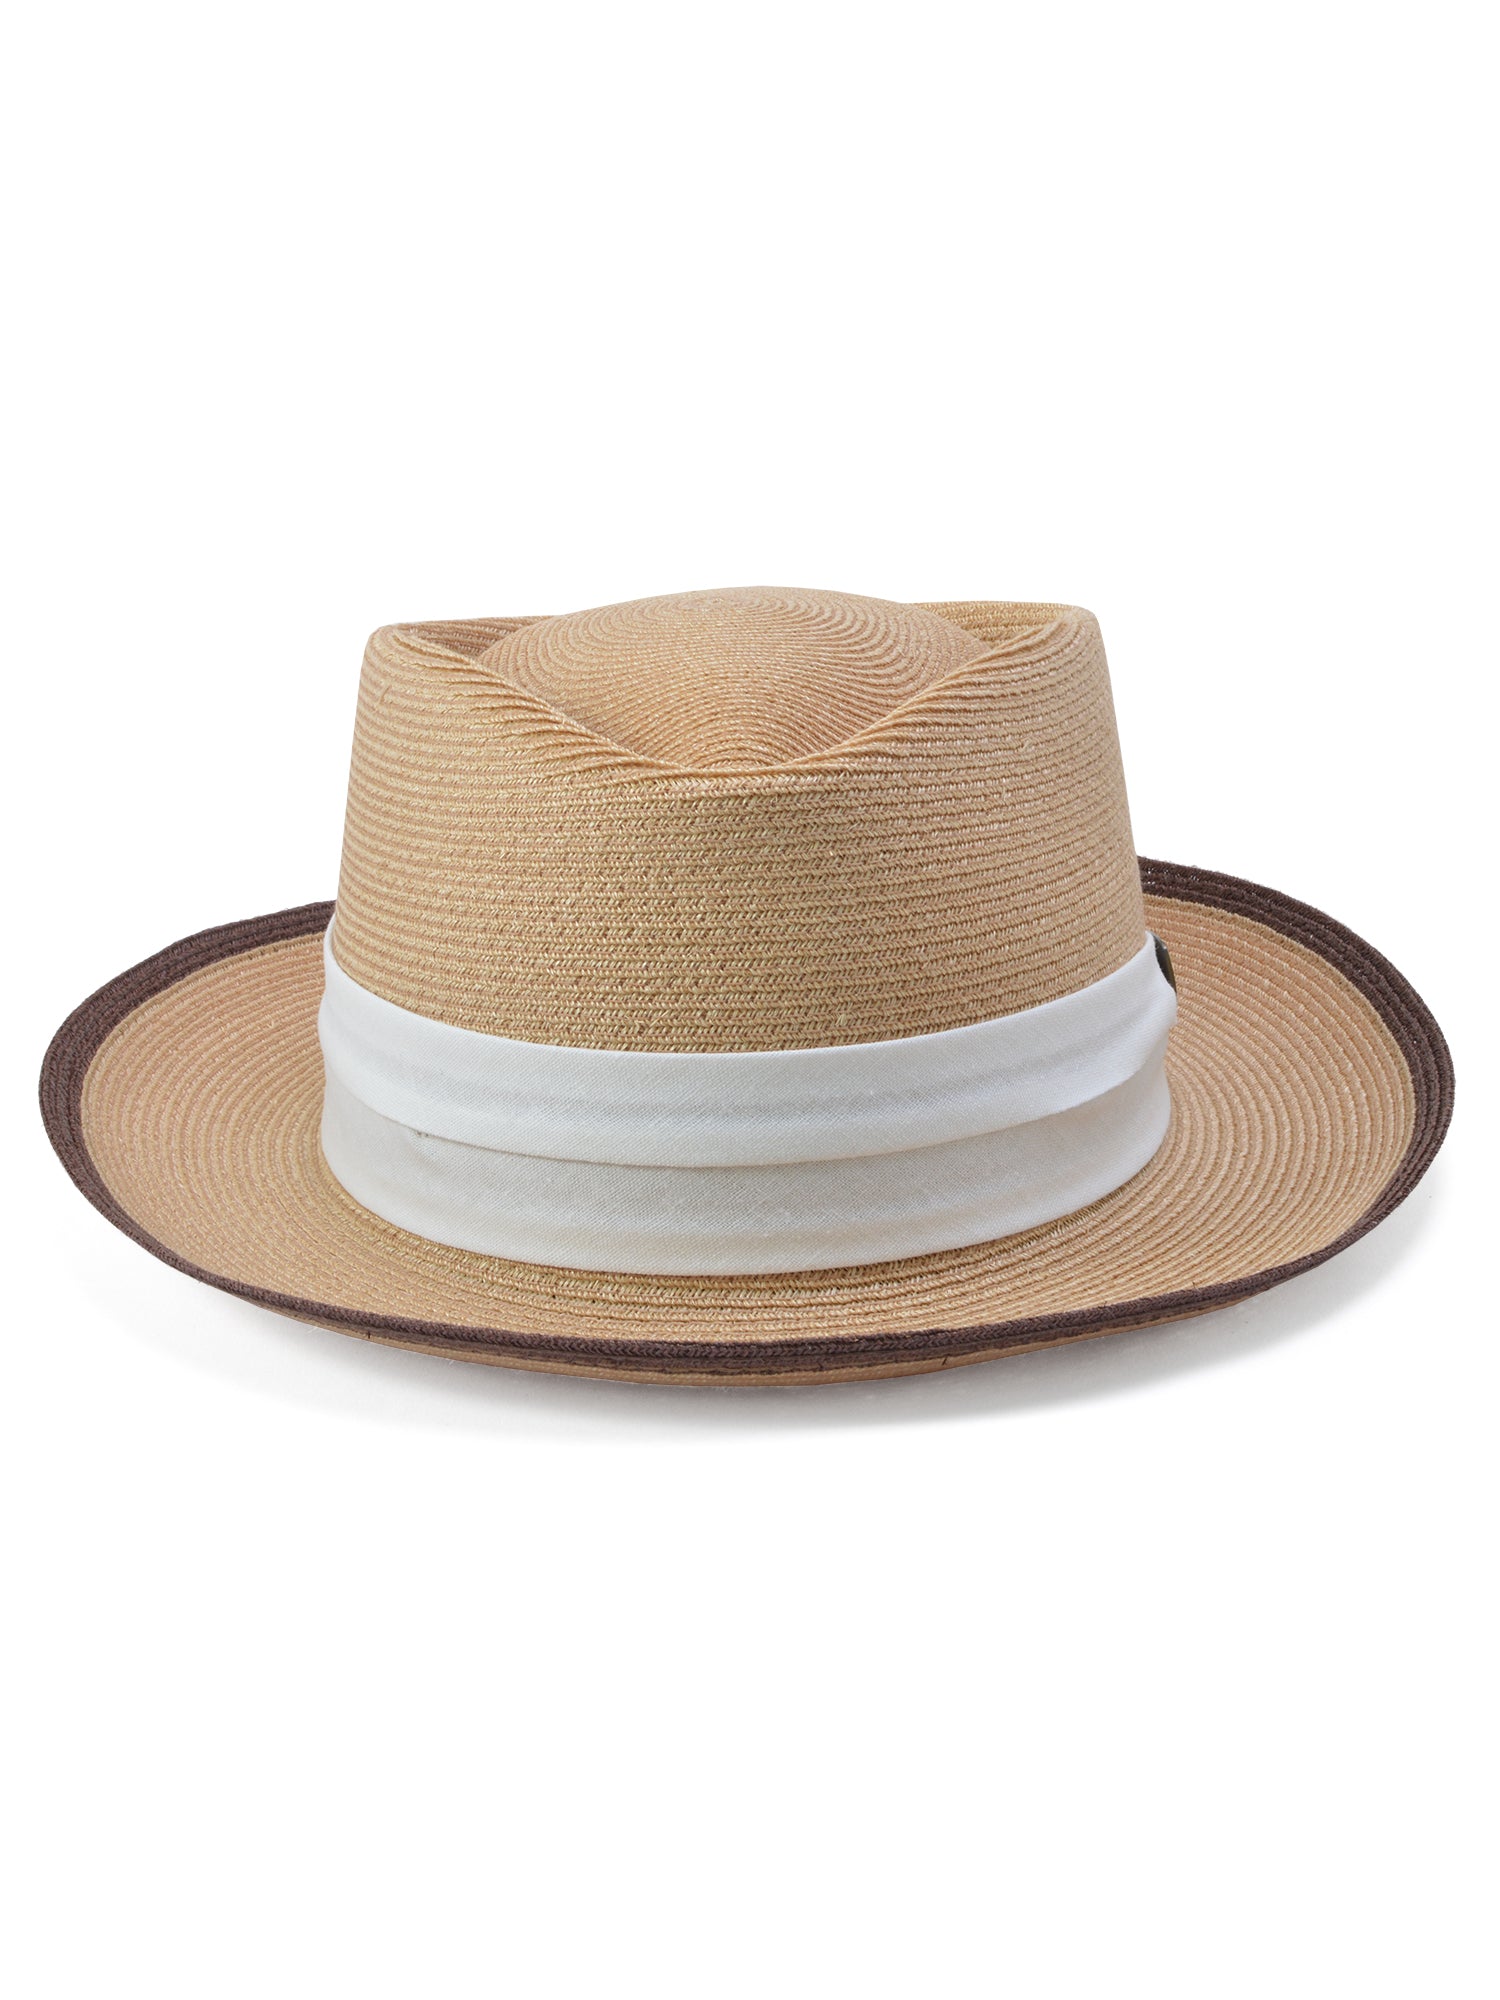 Dobbs The Lineup Hemp Straw Fedora Hat in Beige/Chocolate - 0